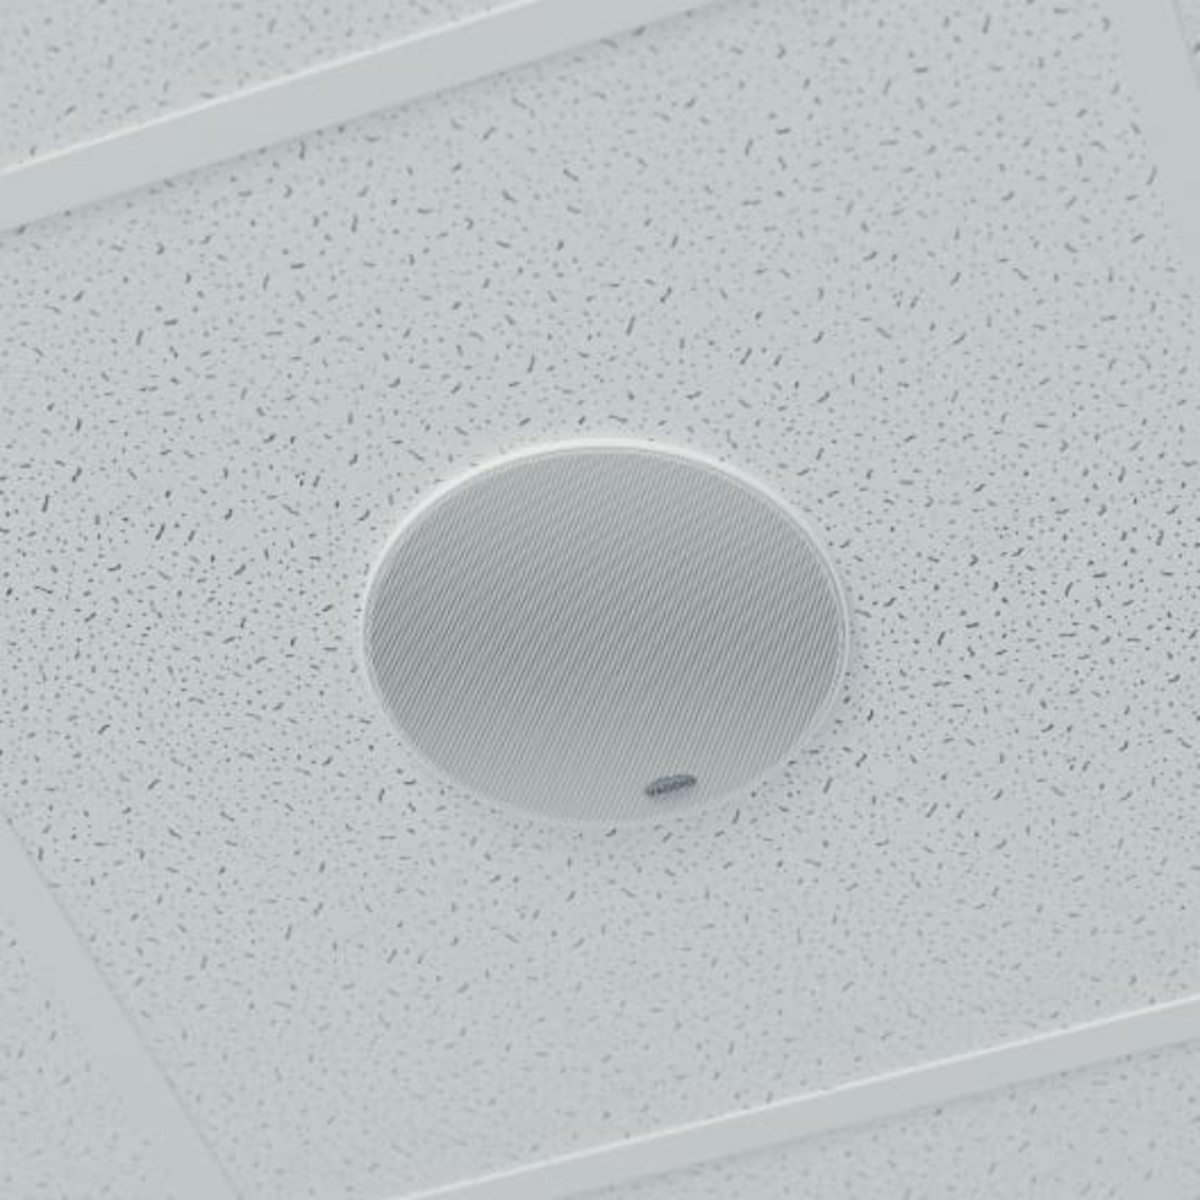 EasyIP Ceiling Speaker D - Dante Version